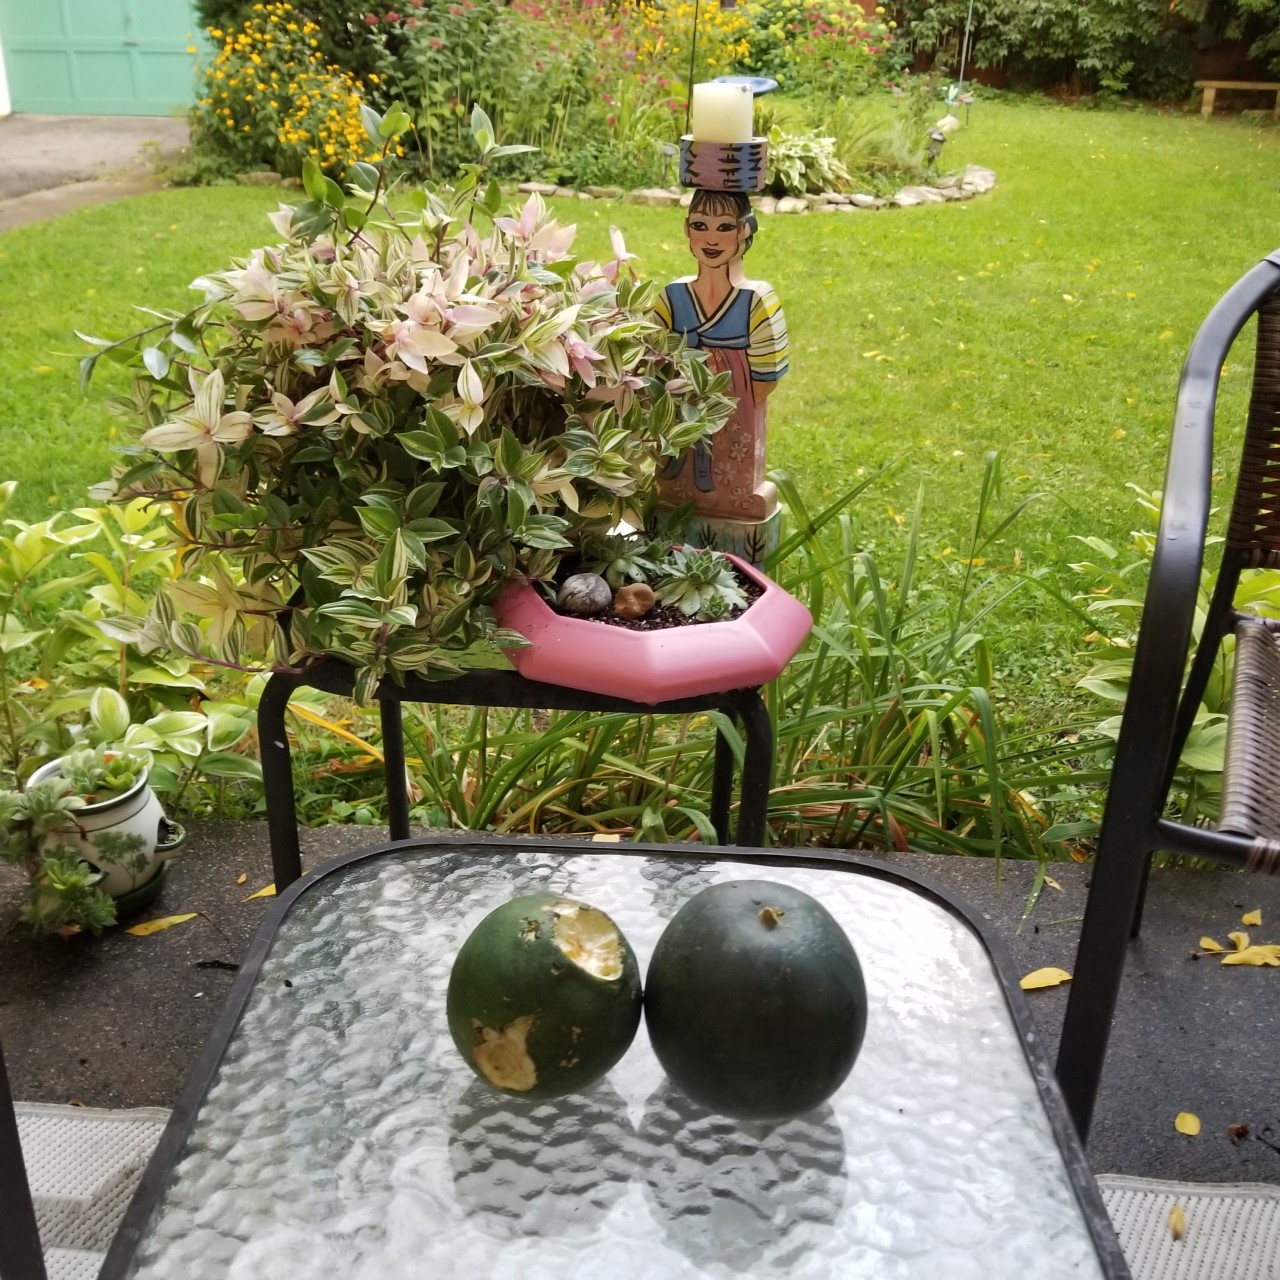 Melons on backyard table